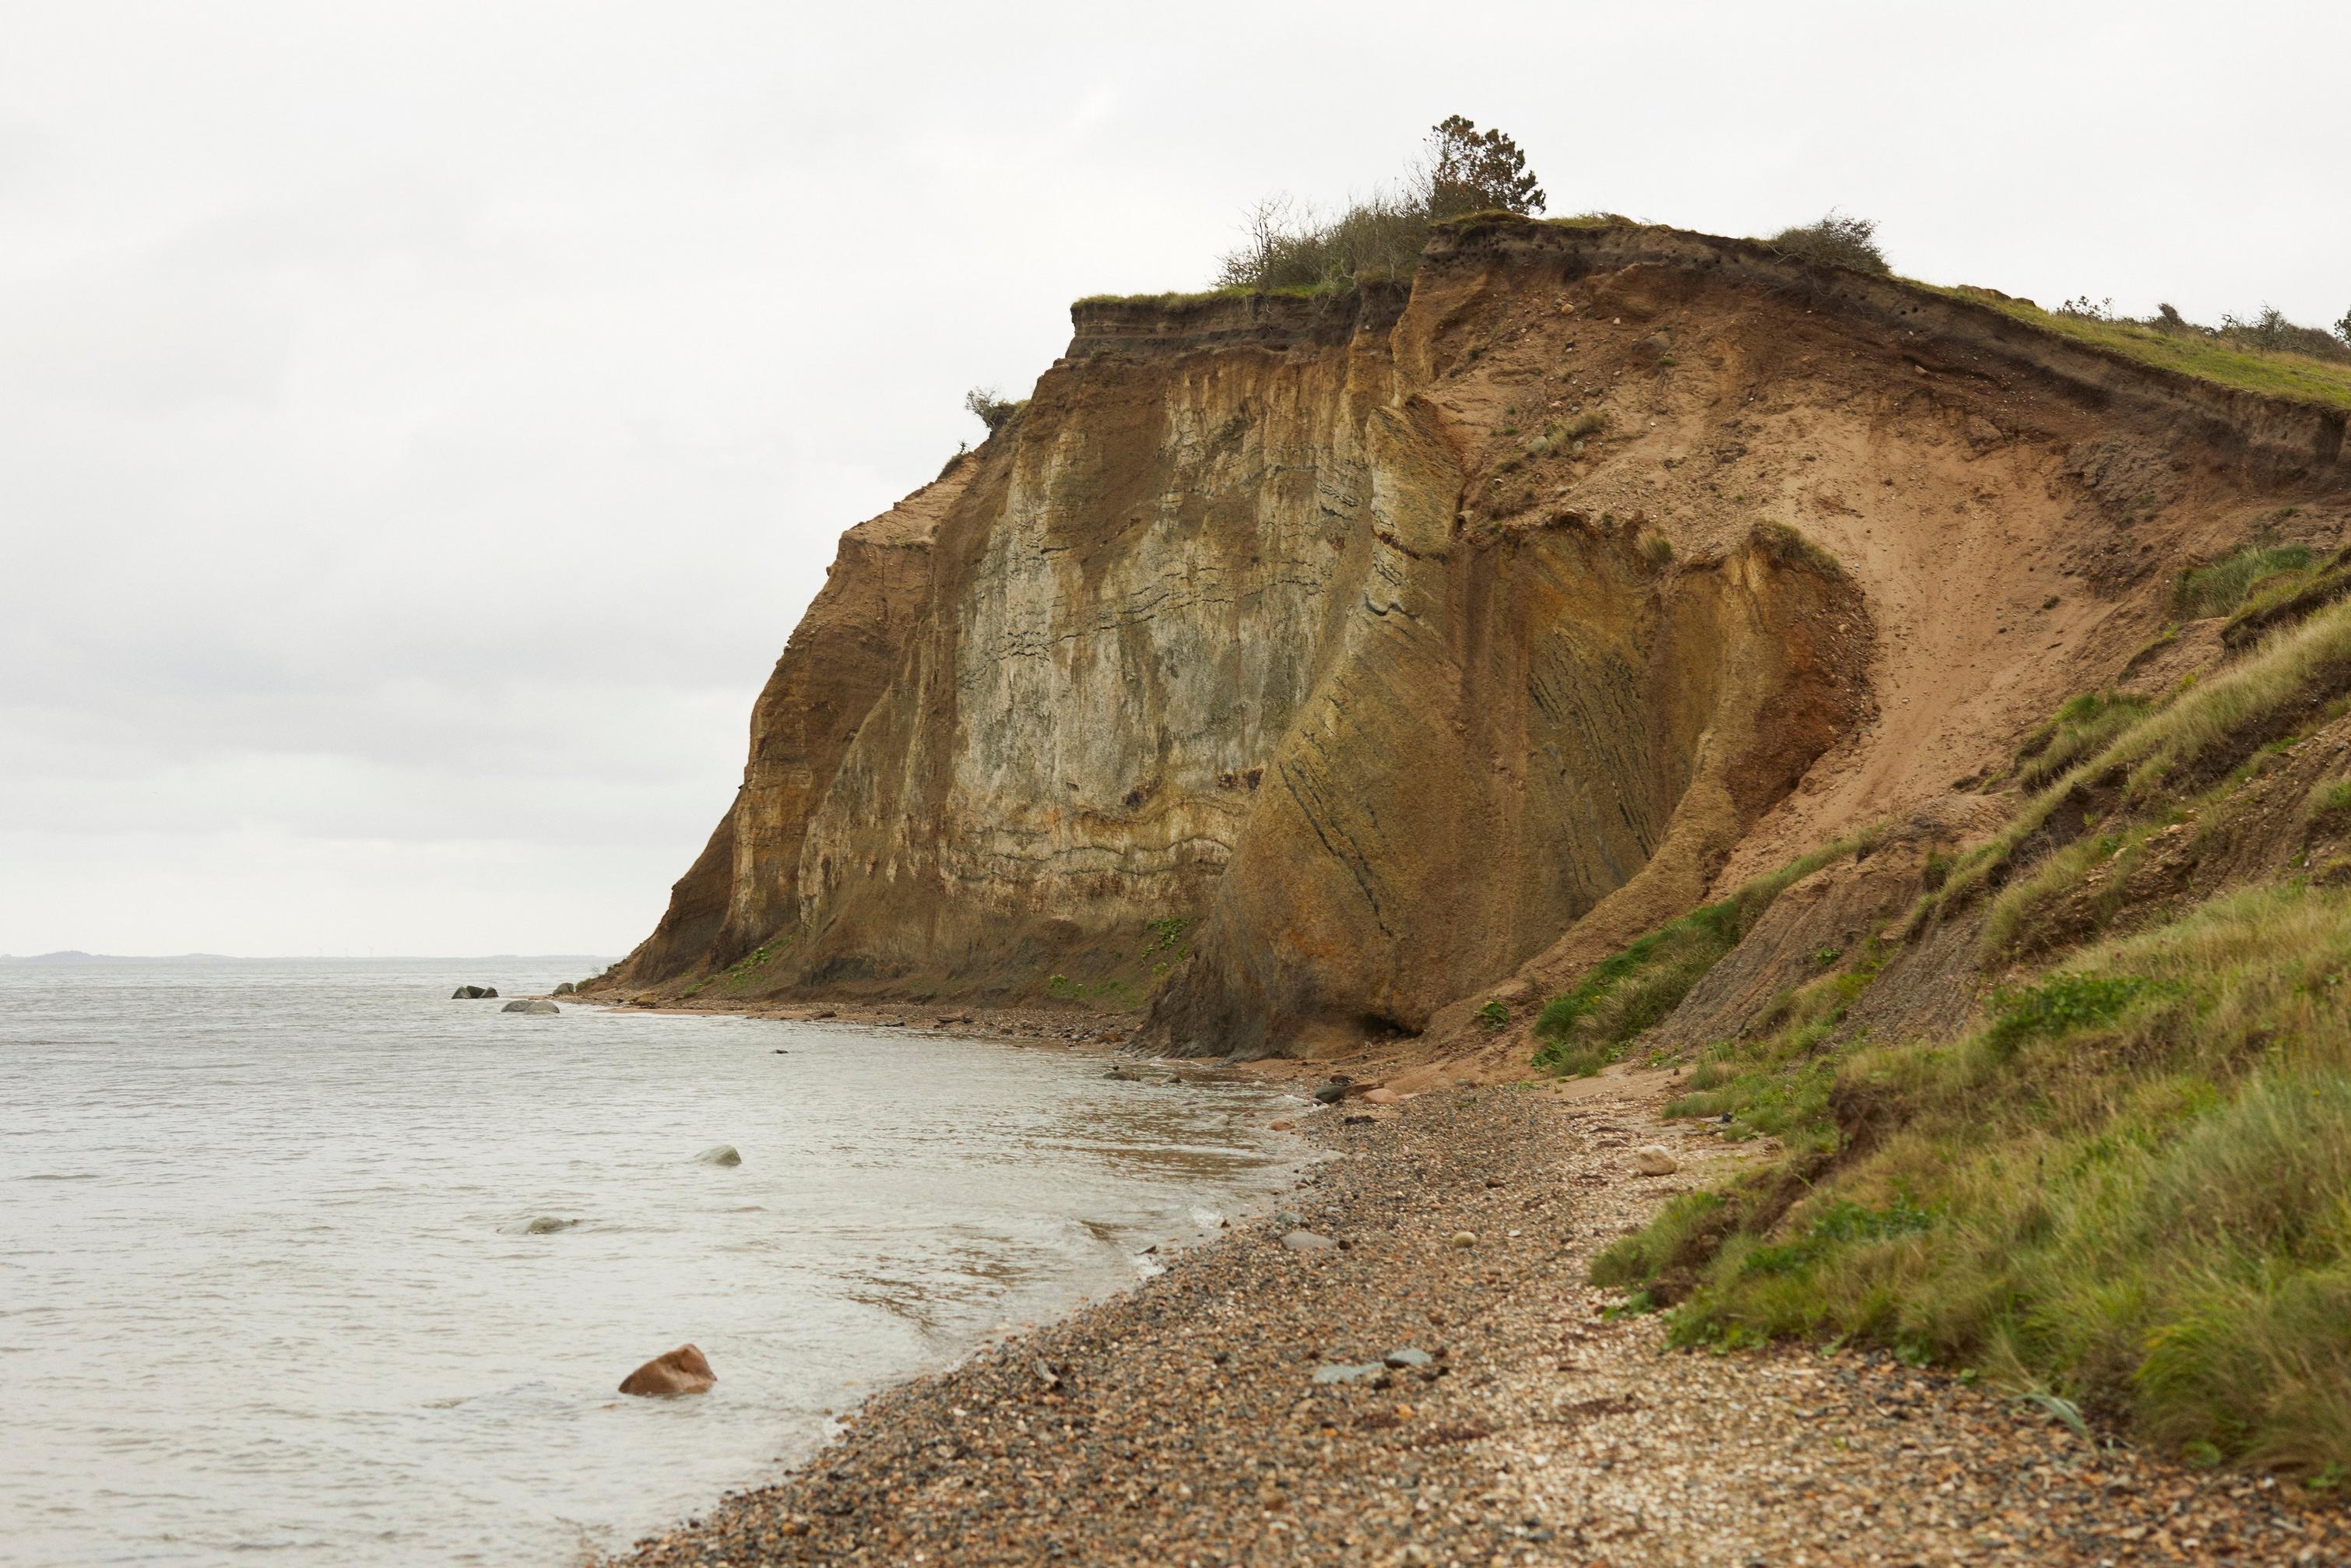 Cliff eroding into a pebble beach with calm sea under overcast sky.